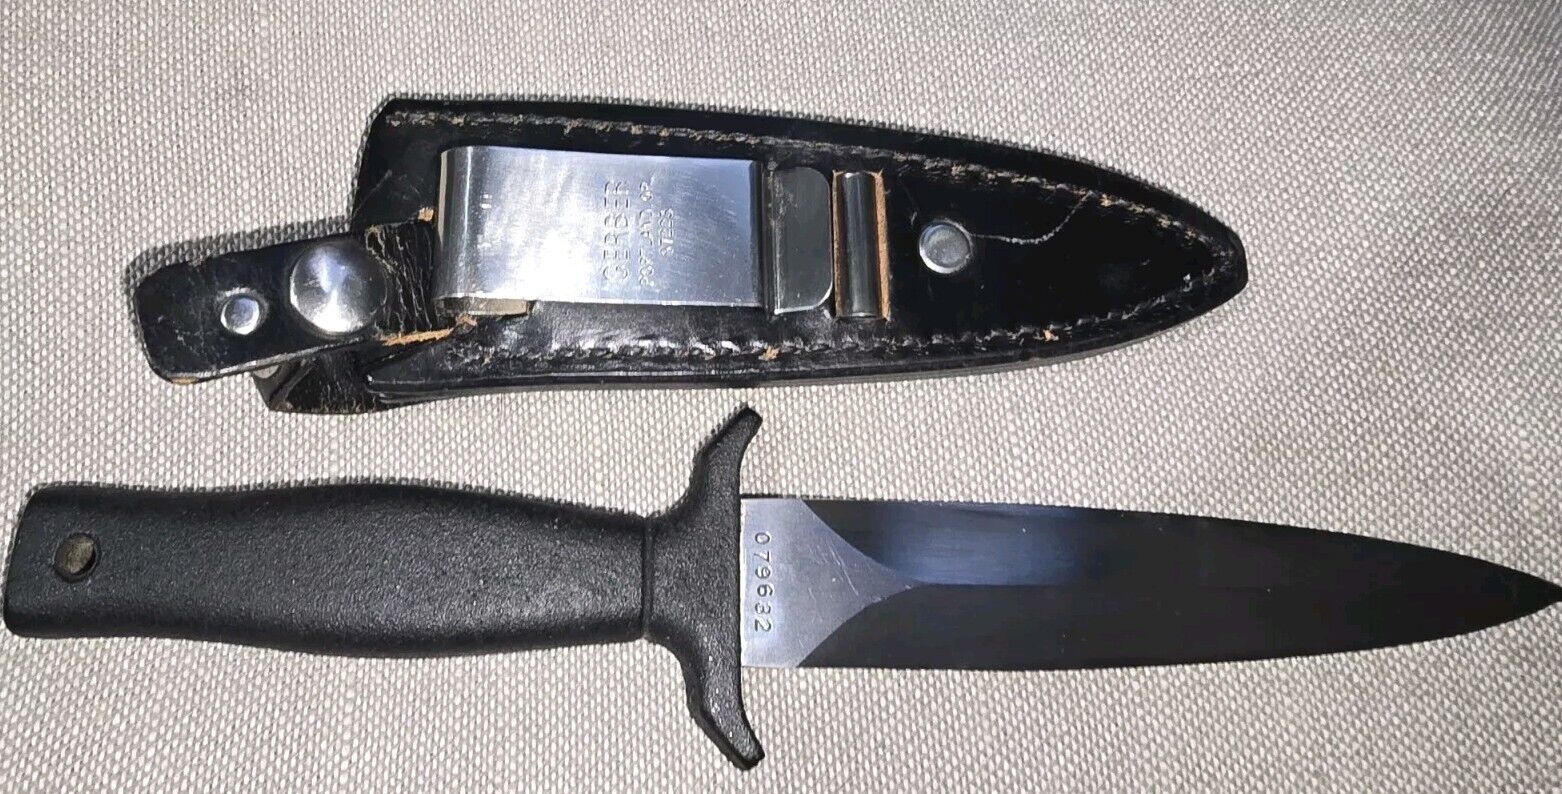 *RARE* Vintage Gerber Mark 1 Boot Knife W/ Original Sheath - Serial #079632